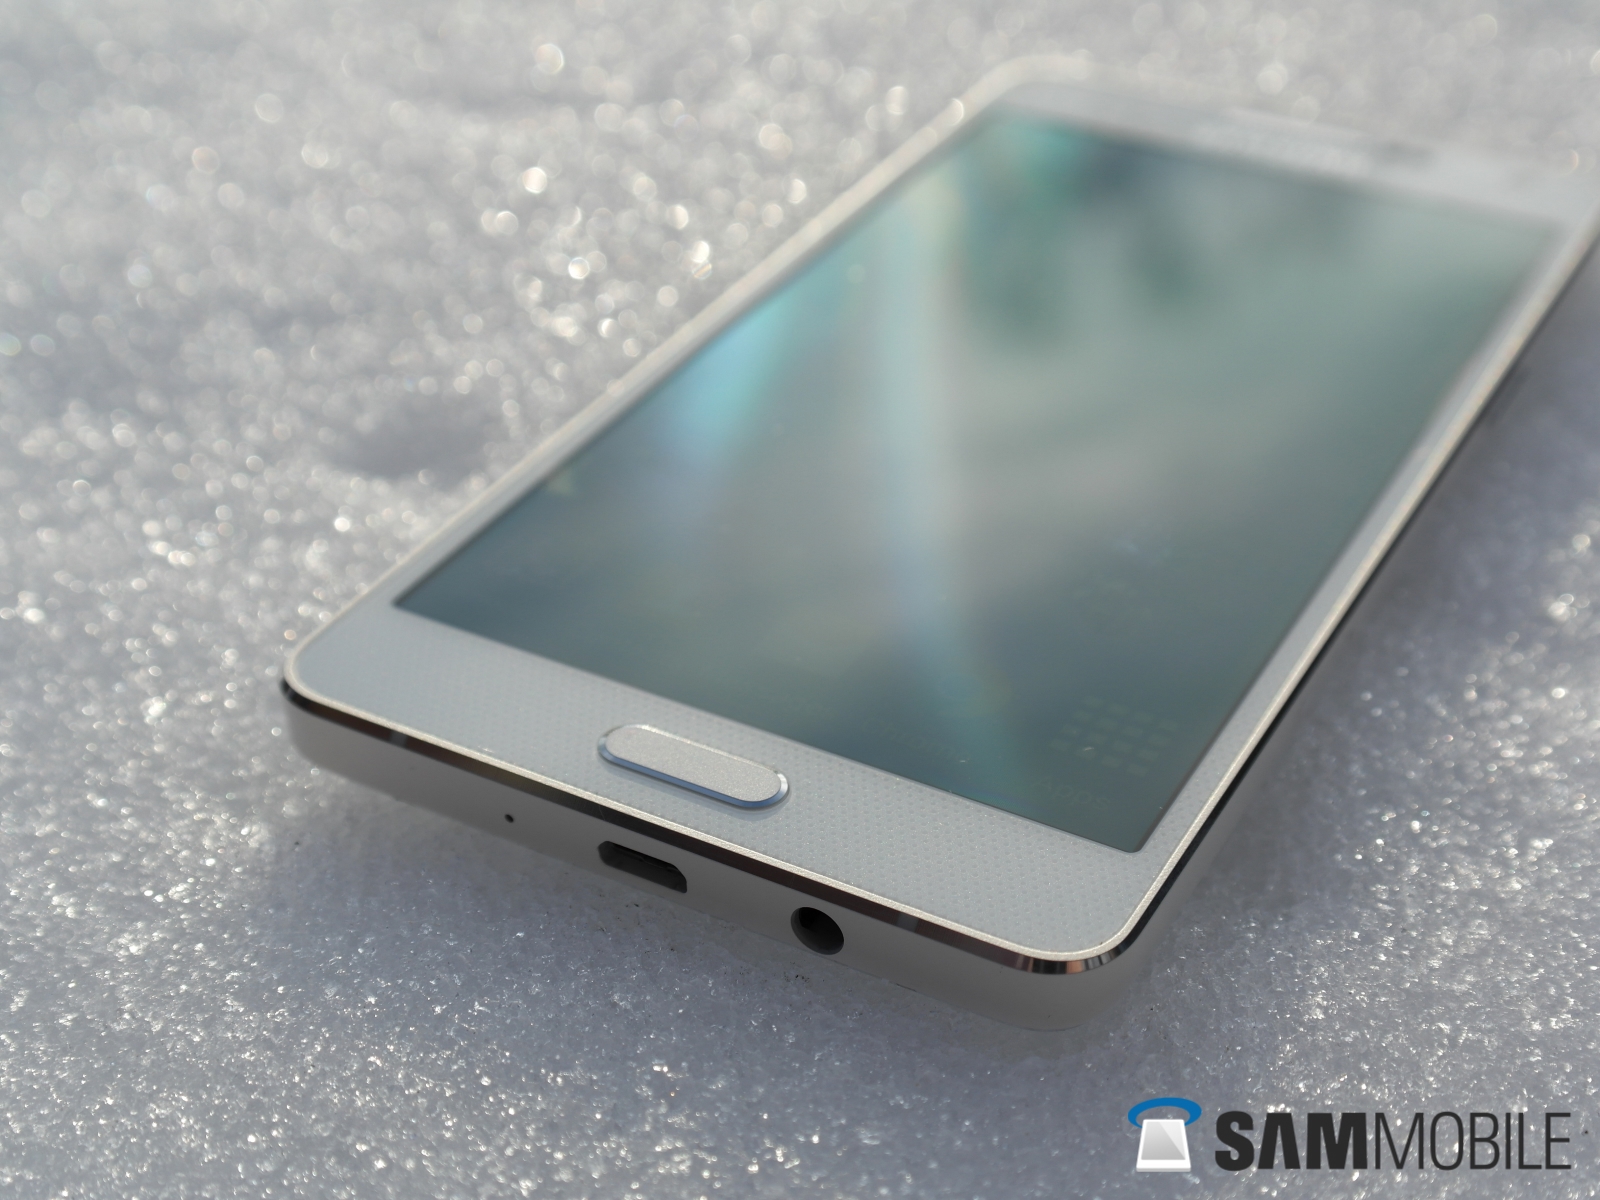 Unikly specifikace Samsungu Galaxy A8